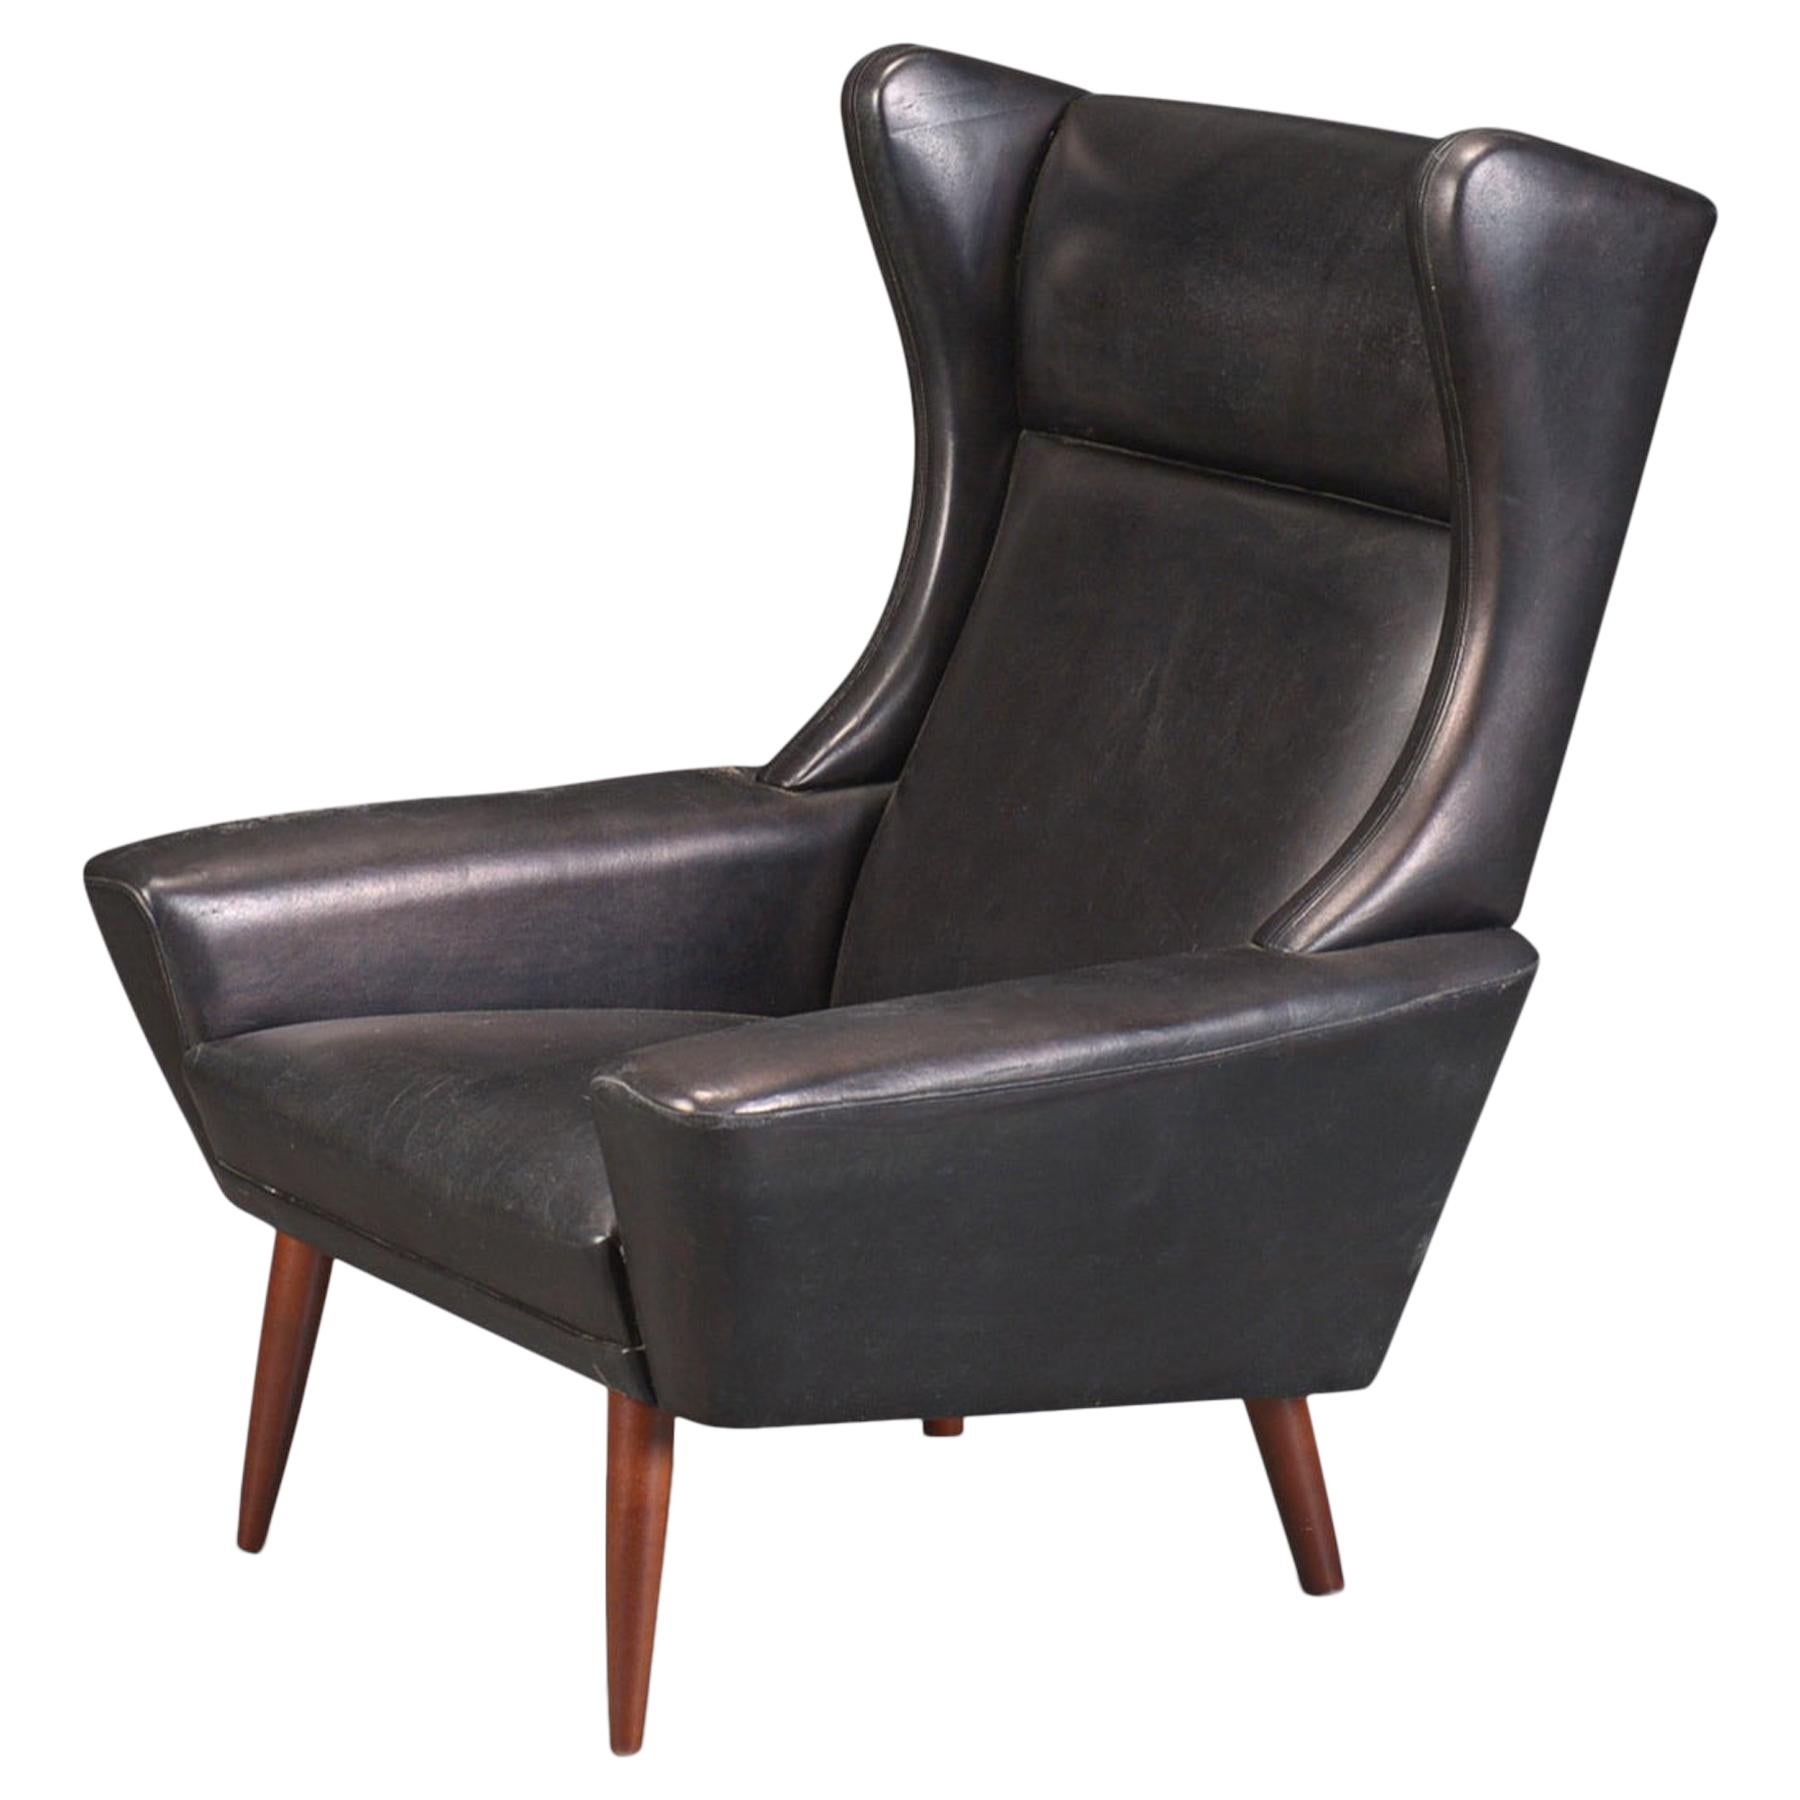 Danish Modern High Wingback Chair in Black Leather